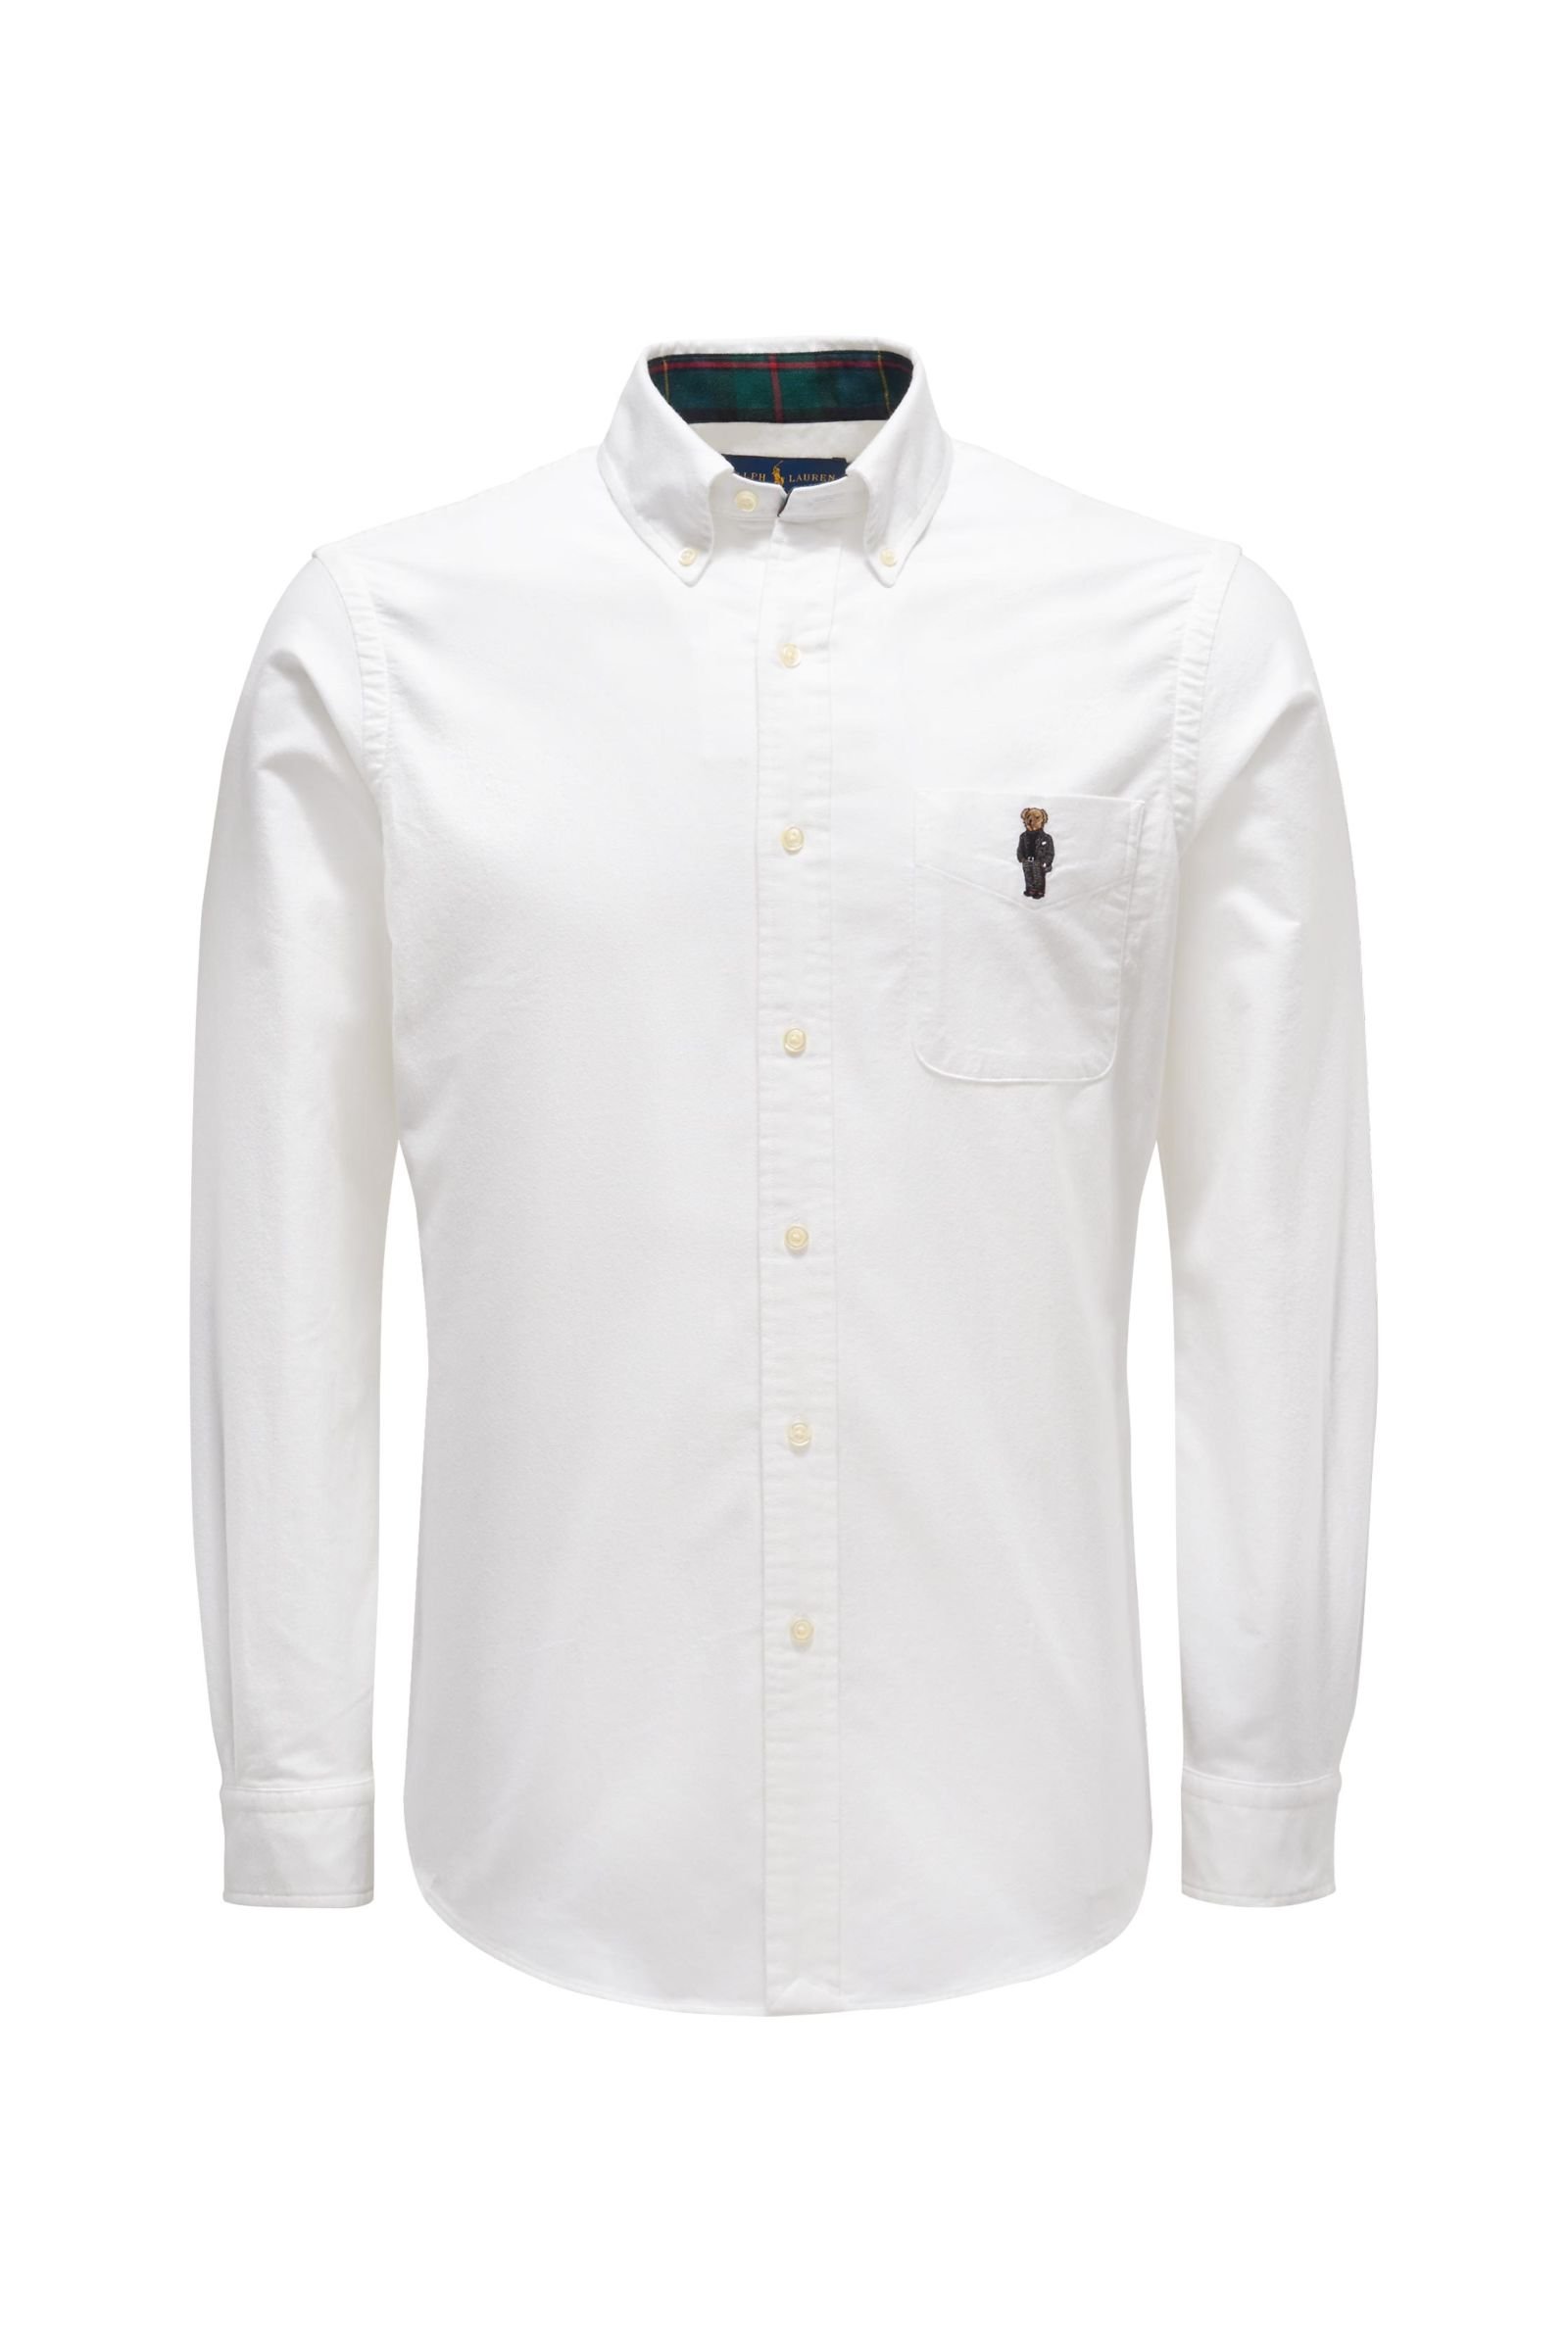 Flannel shirt button-down collar white